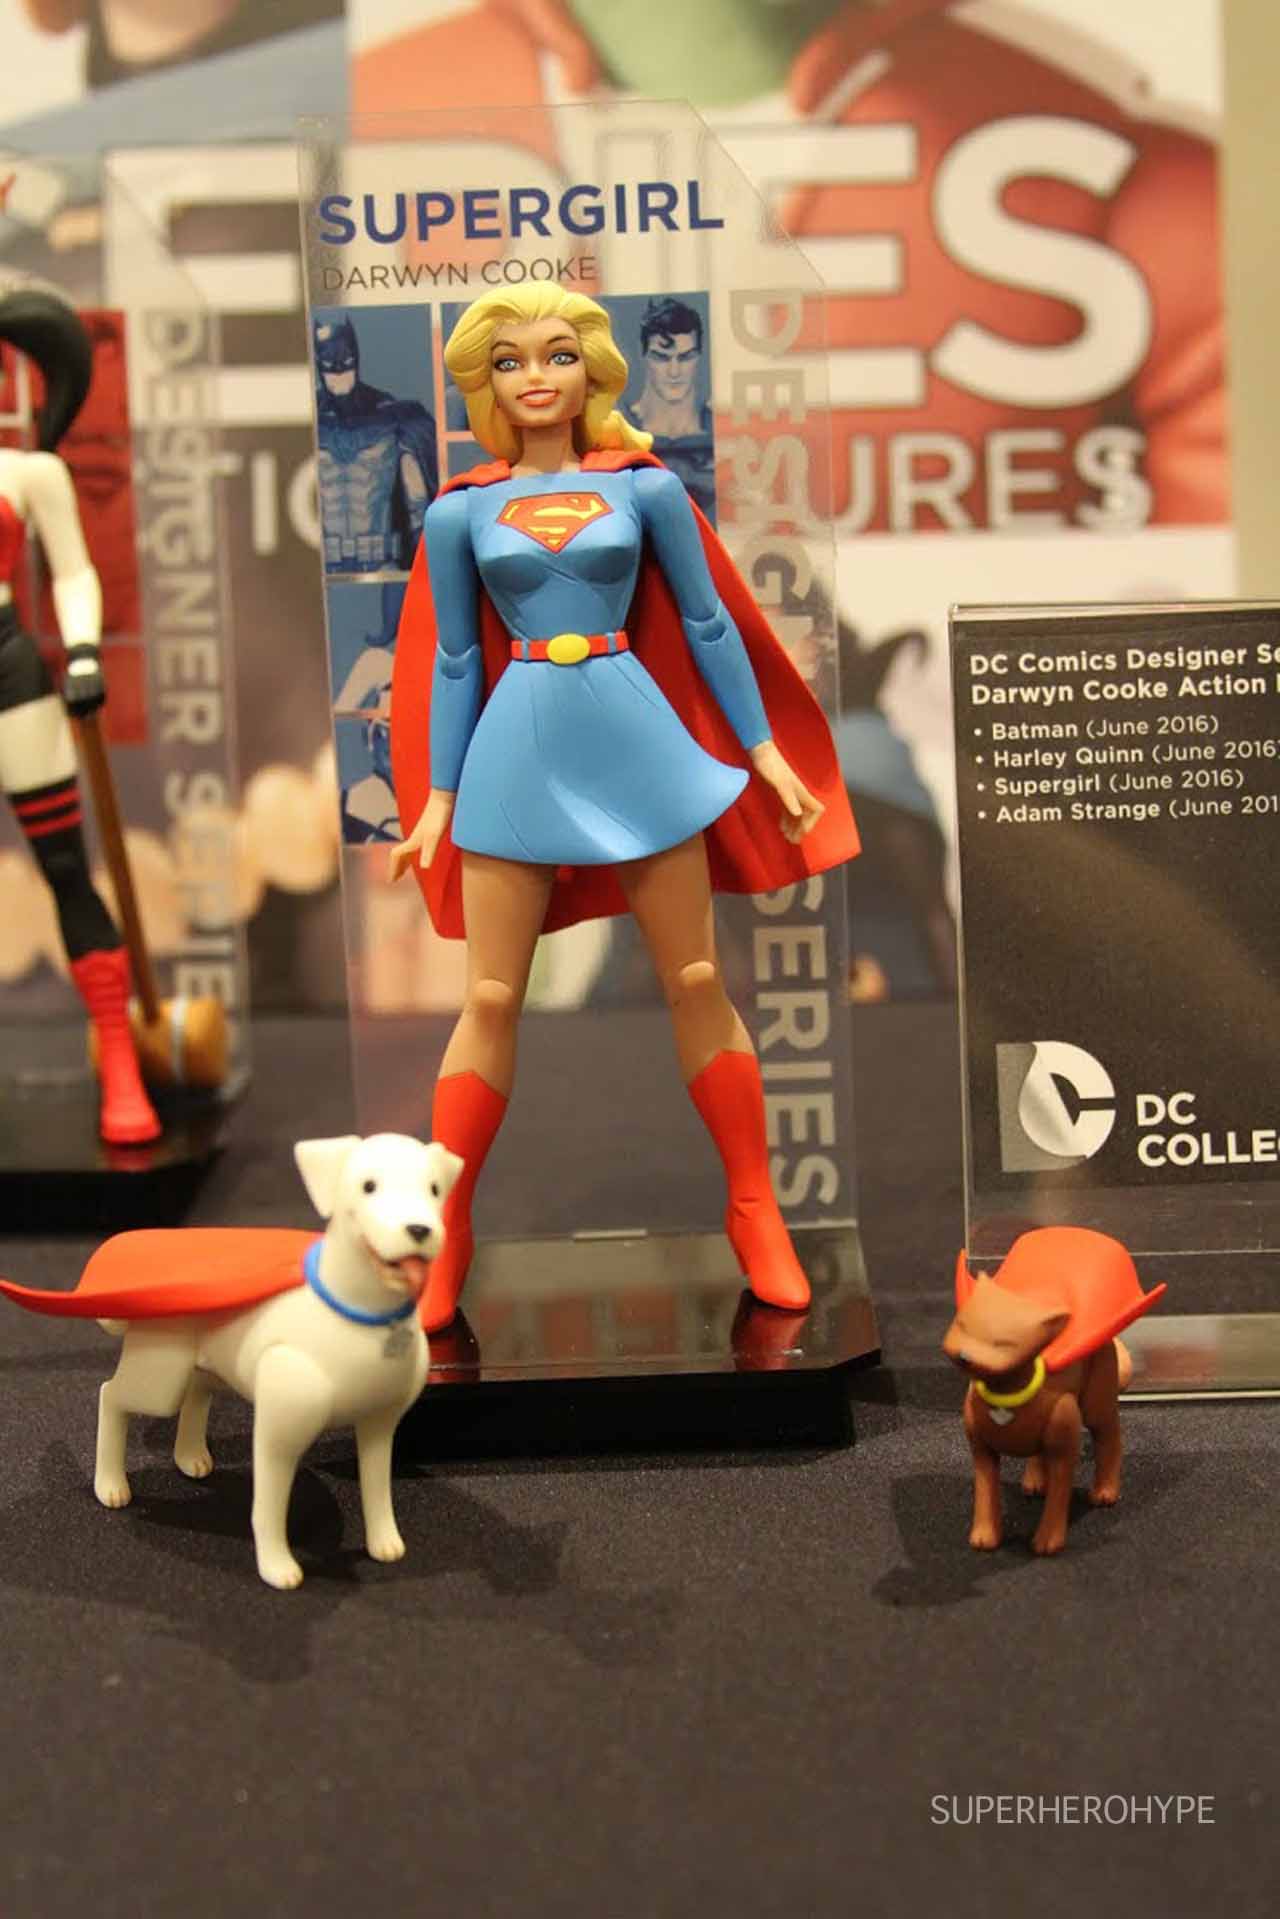 DC Collectibles at Comic-Con 2015